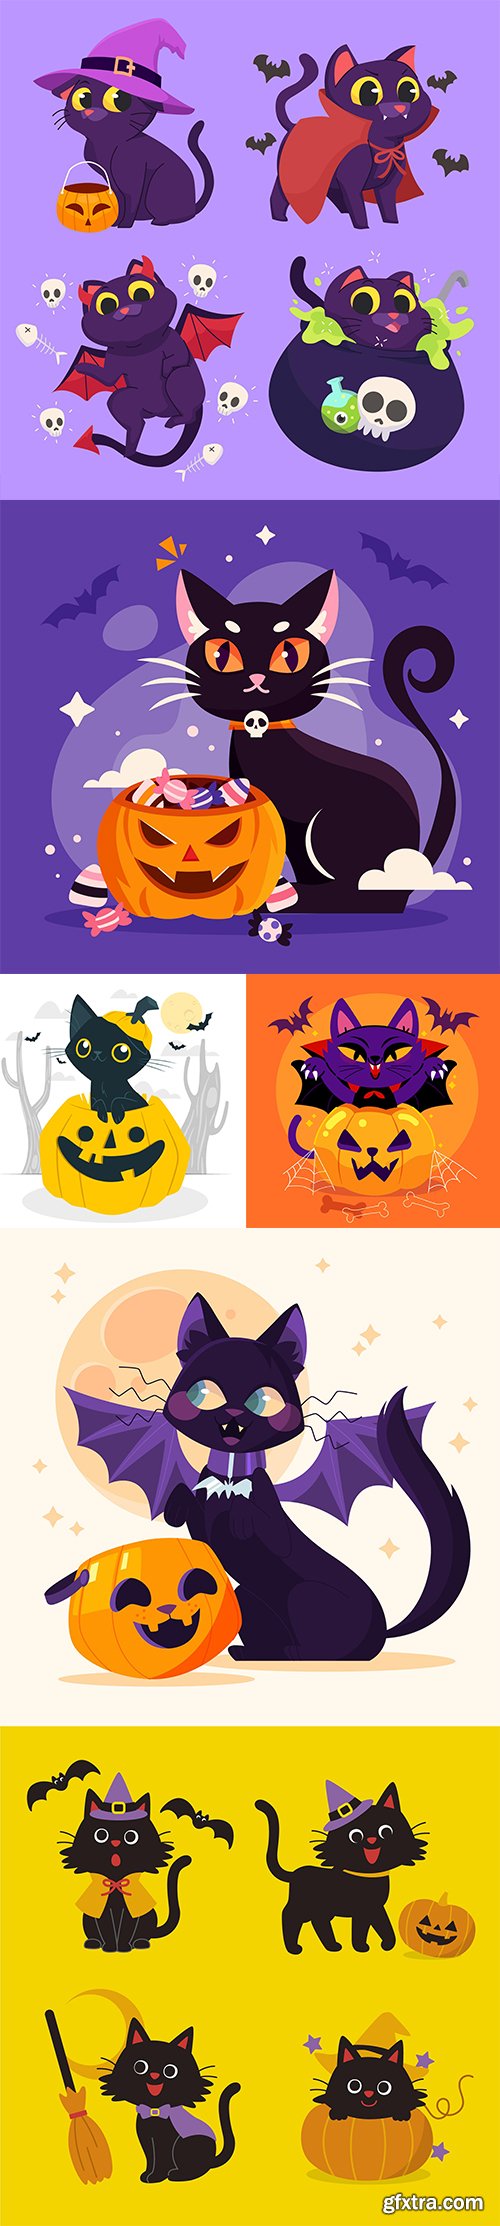 Hand-drawn flat halloween cats illustrations vol 2